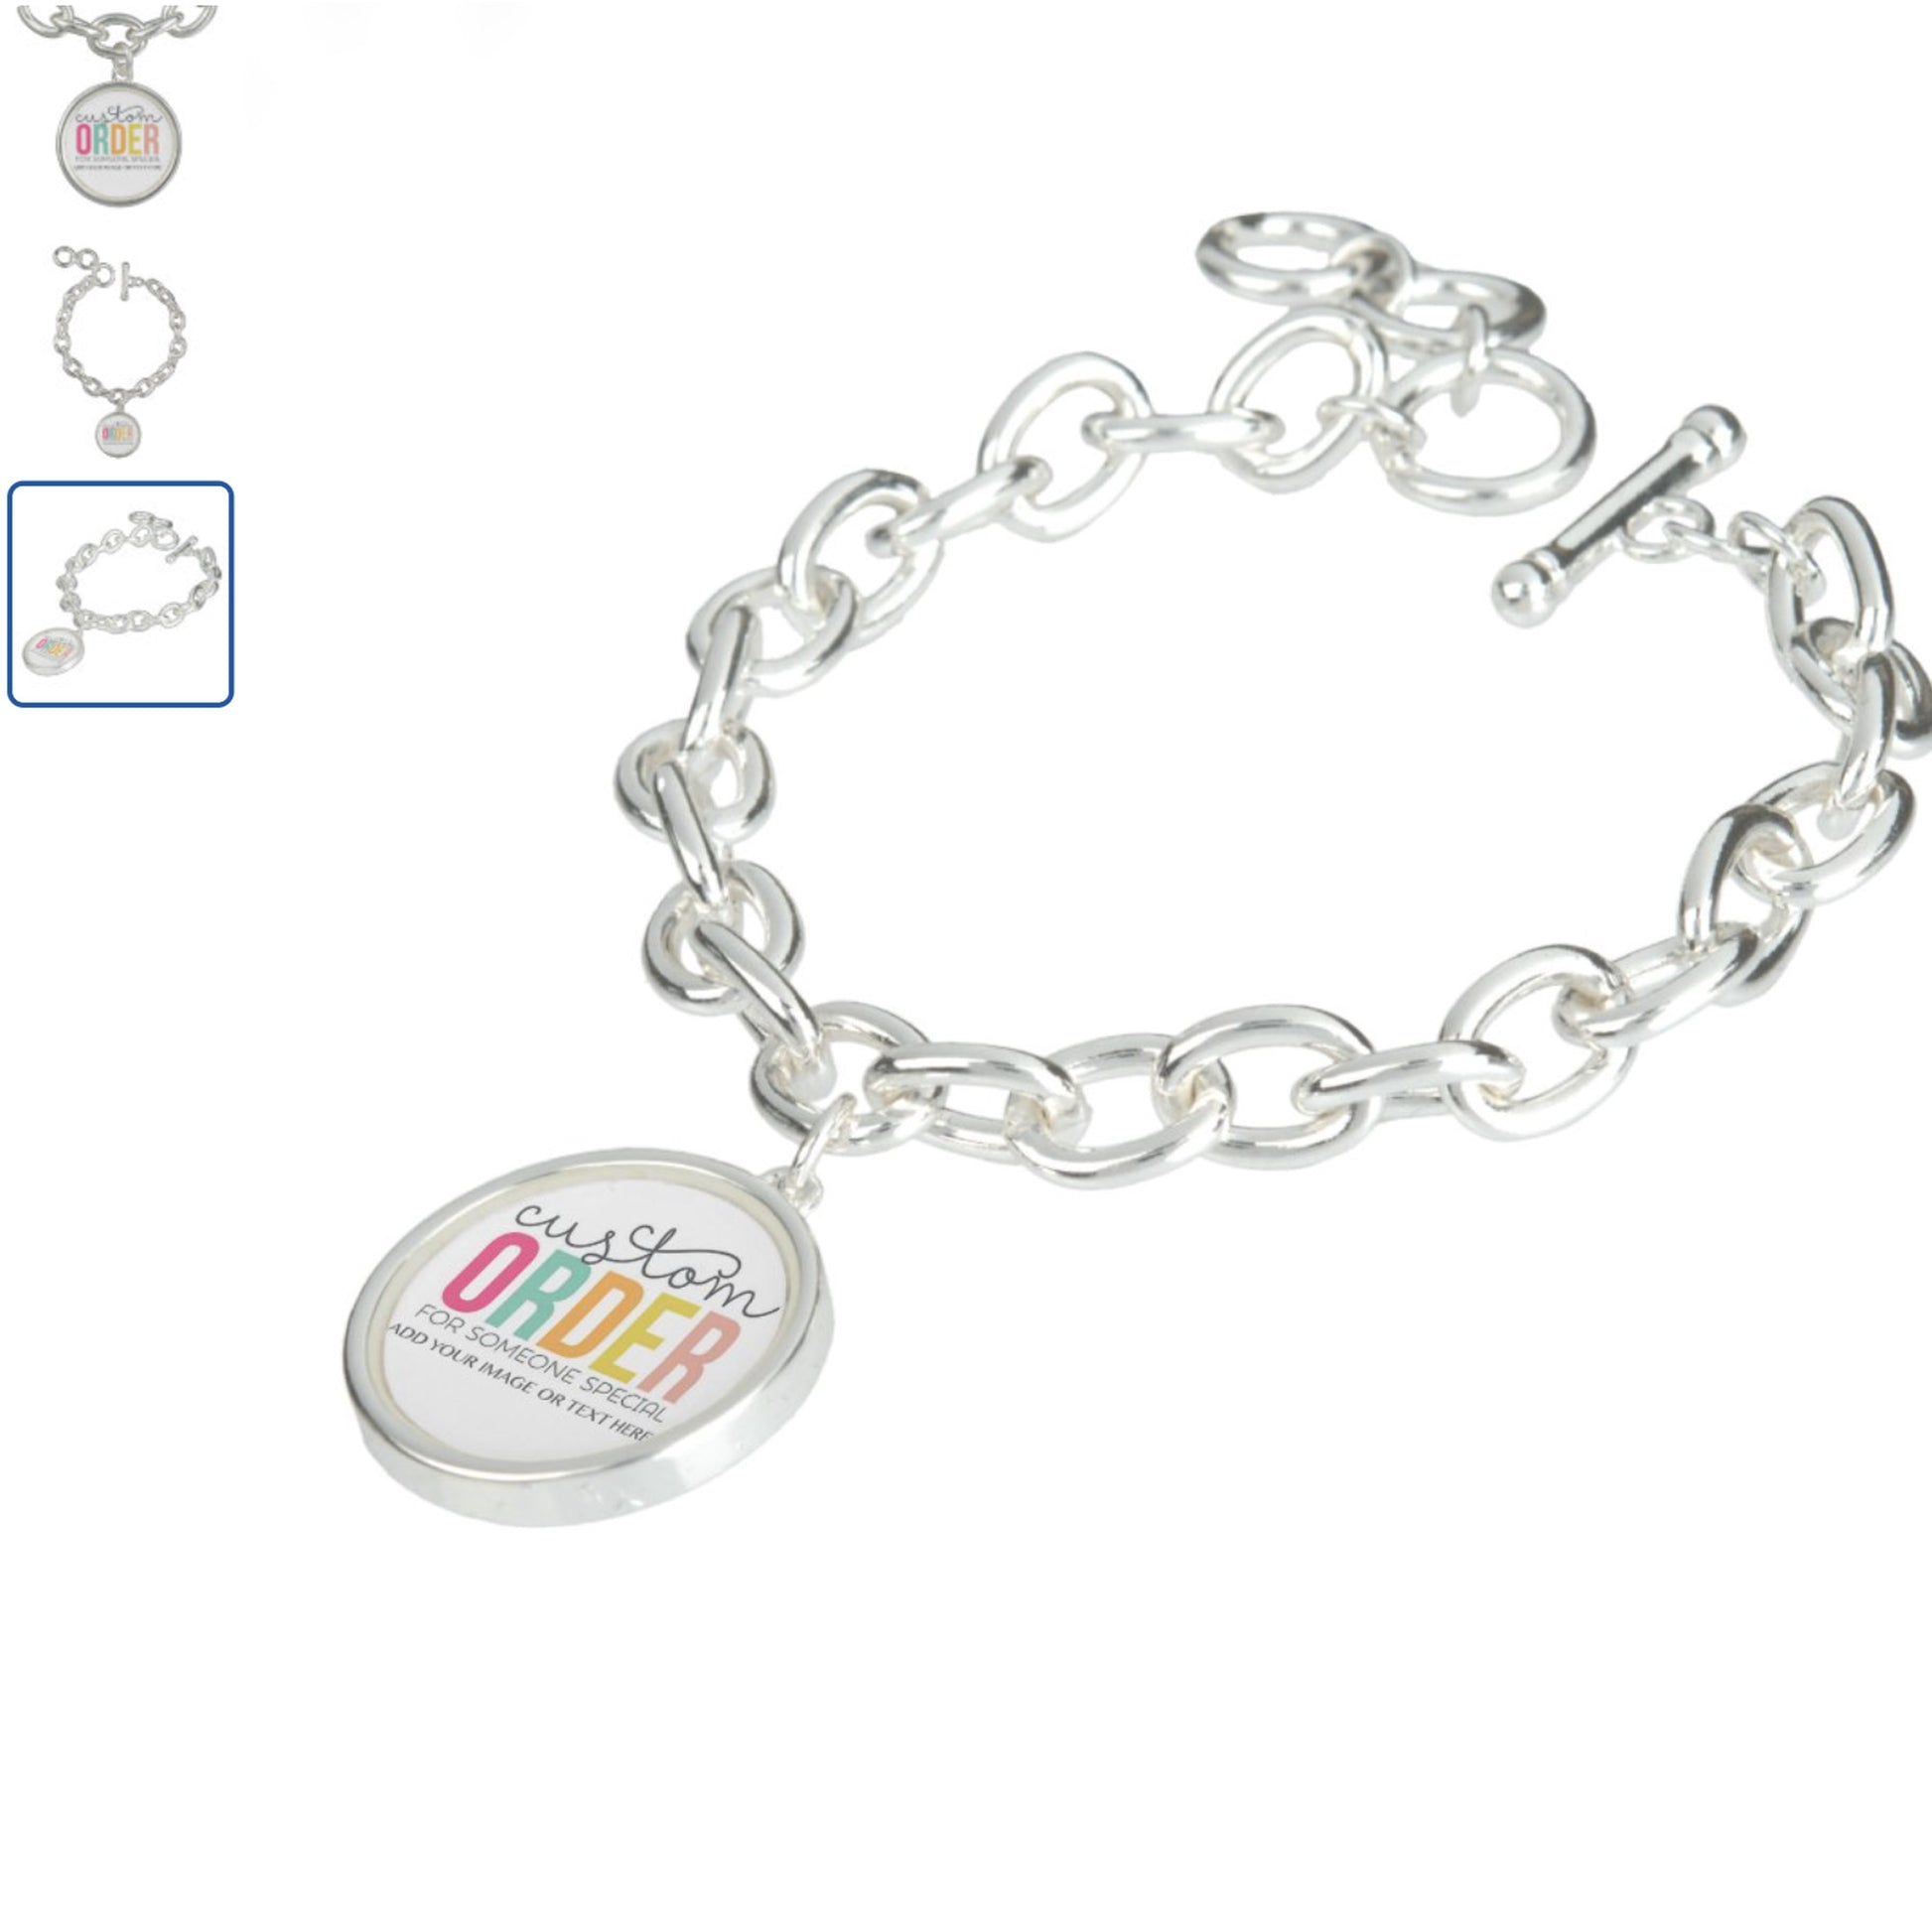 customizable-charm-bracelet-round-side-view